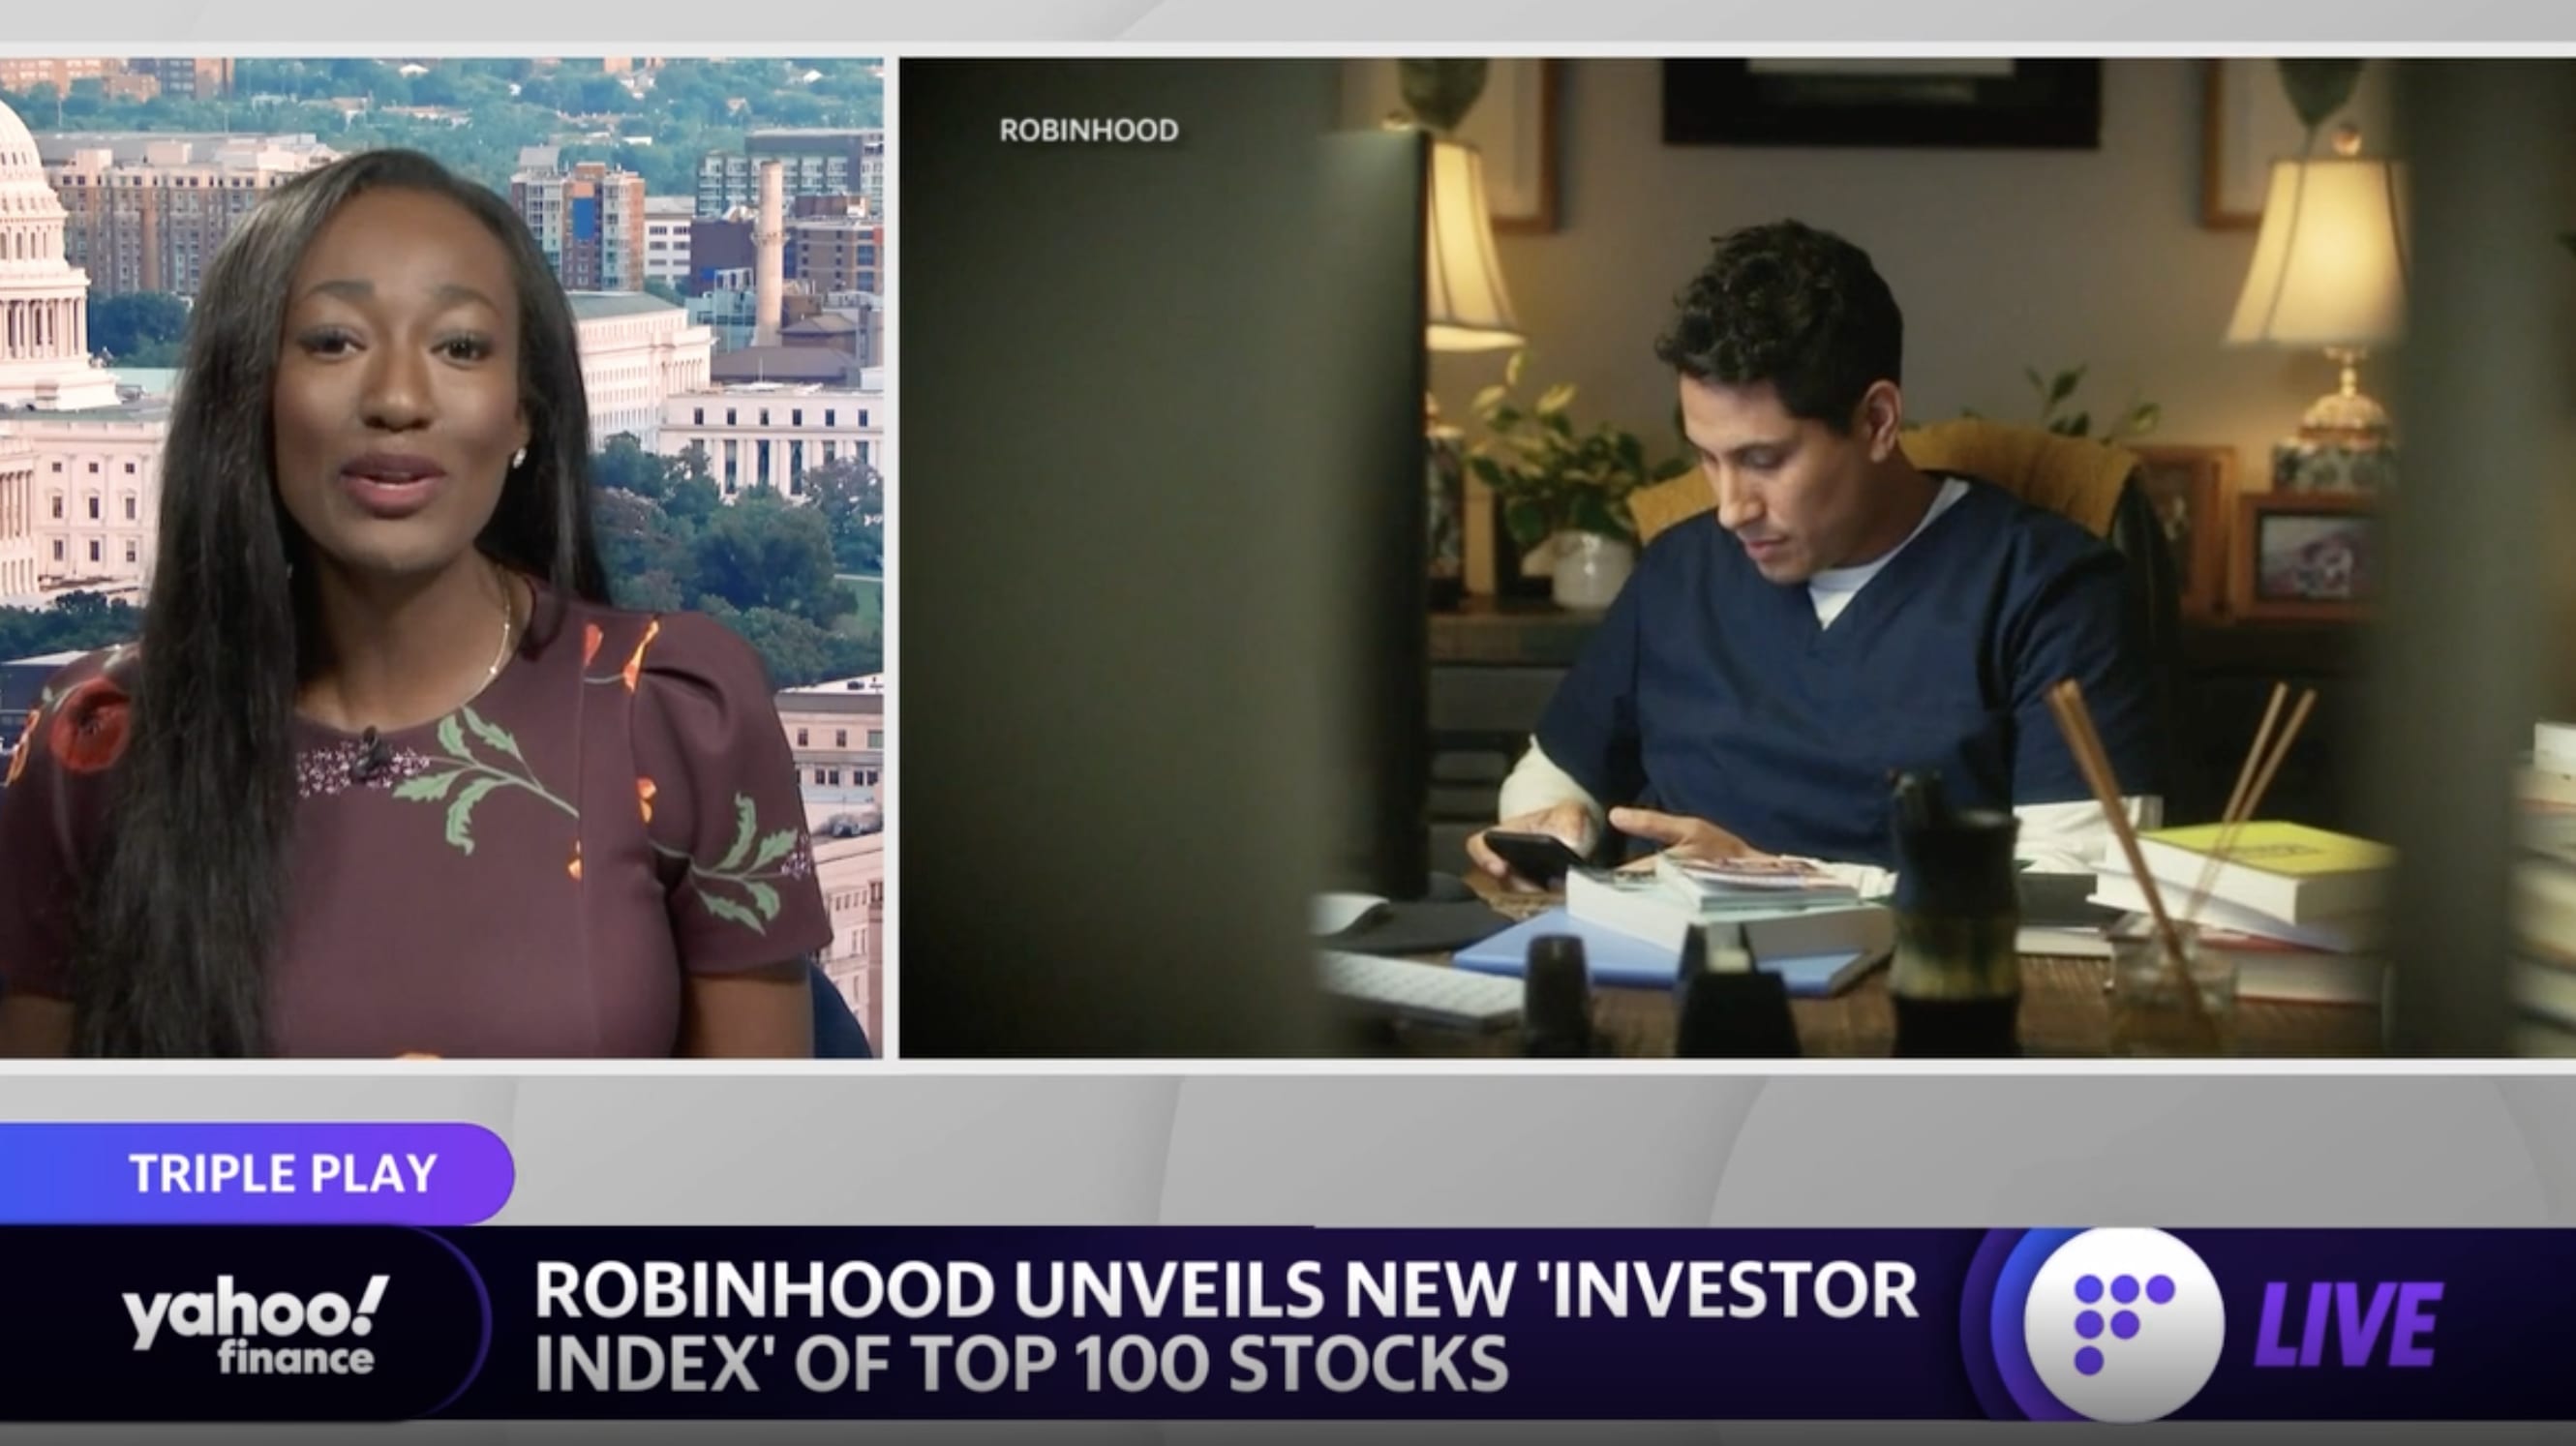 Robinhood unveils 'investor index' of top 100 stocks